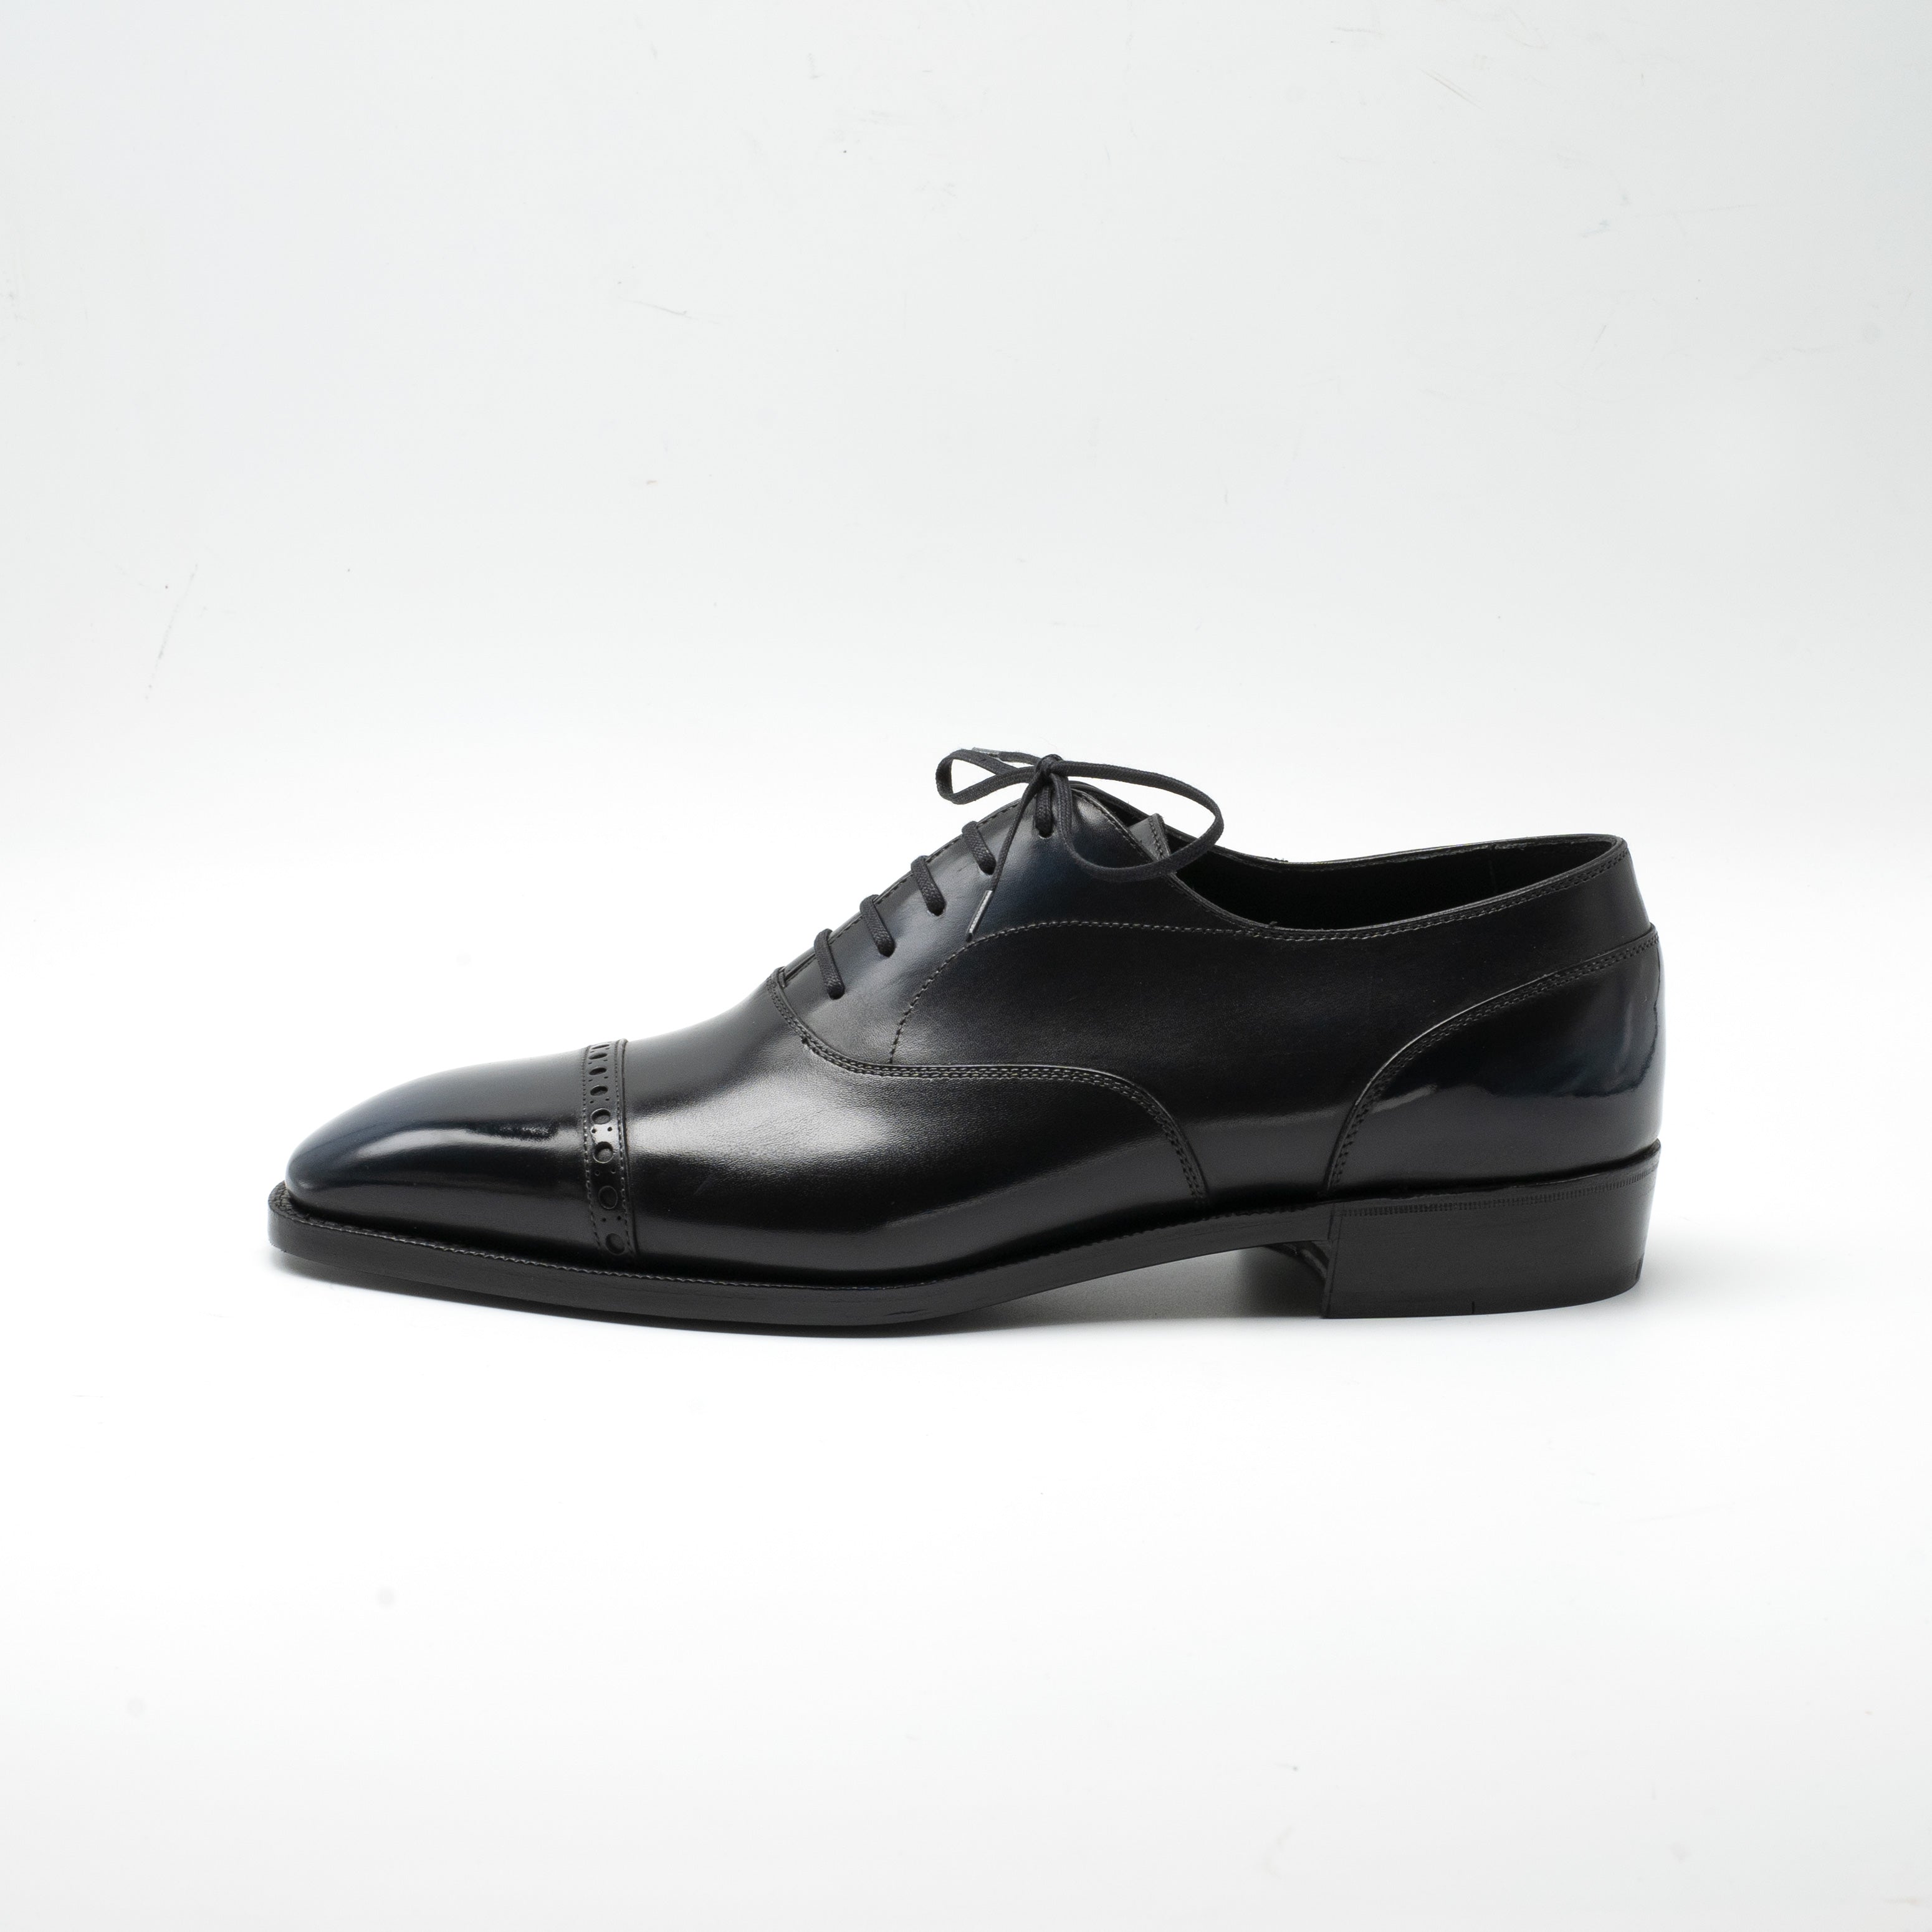 Mario Men's Cap Toe Oxford Shoes by Norman Vilalta Bespoke Shoemakers of Barcelona